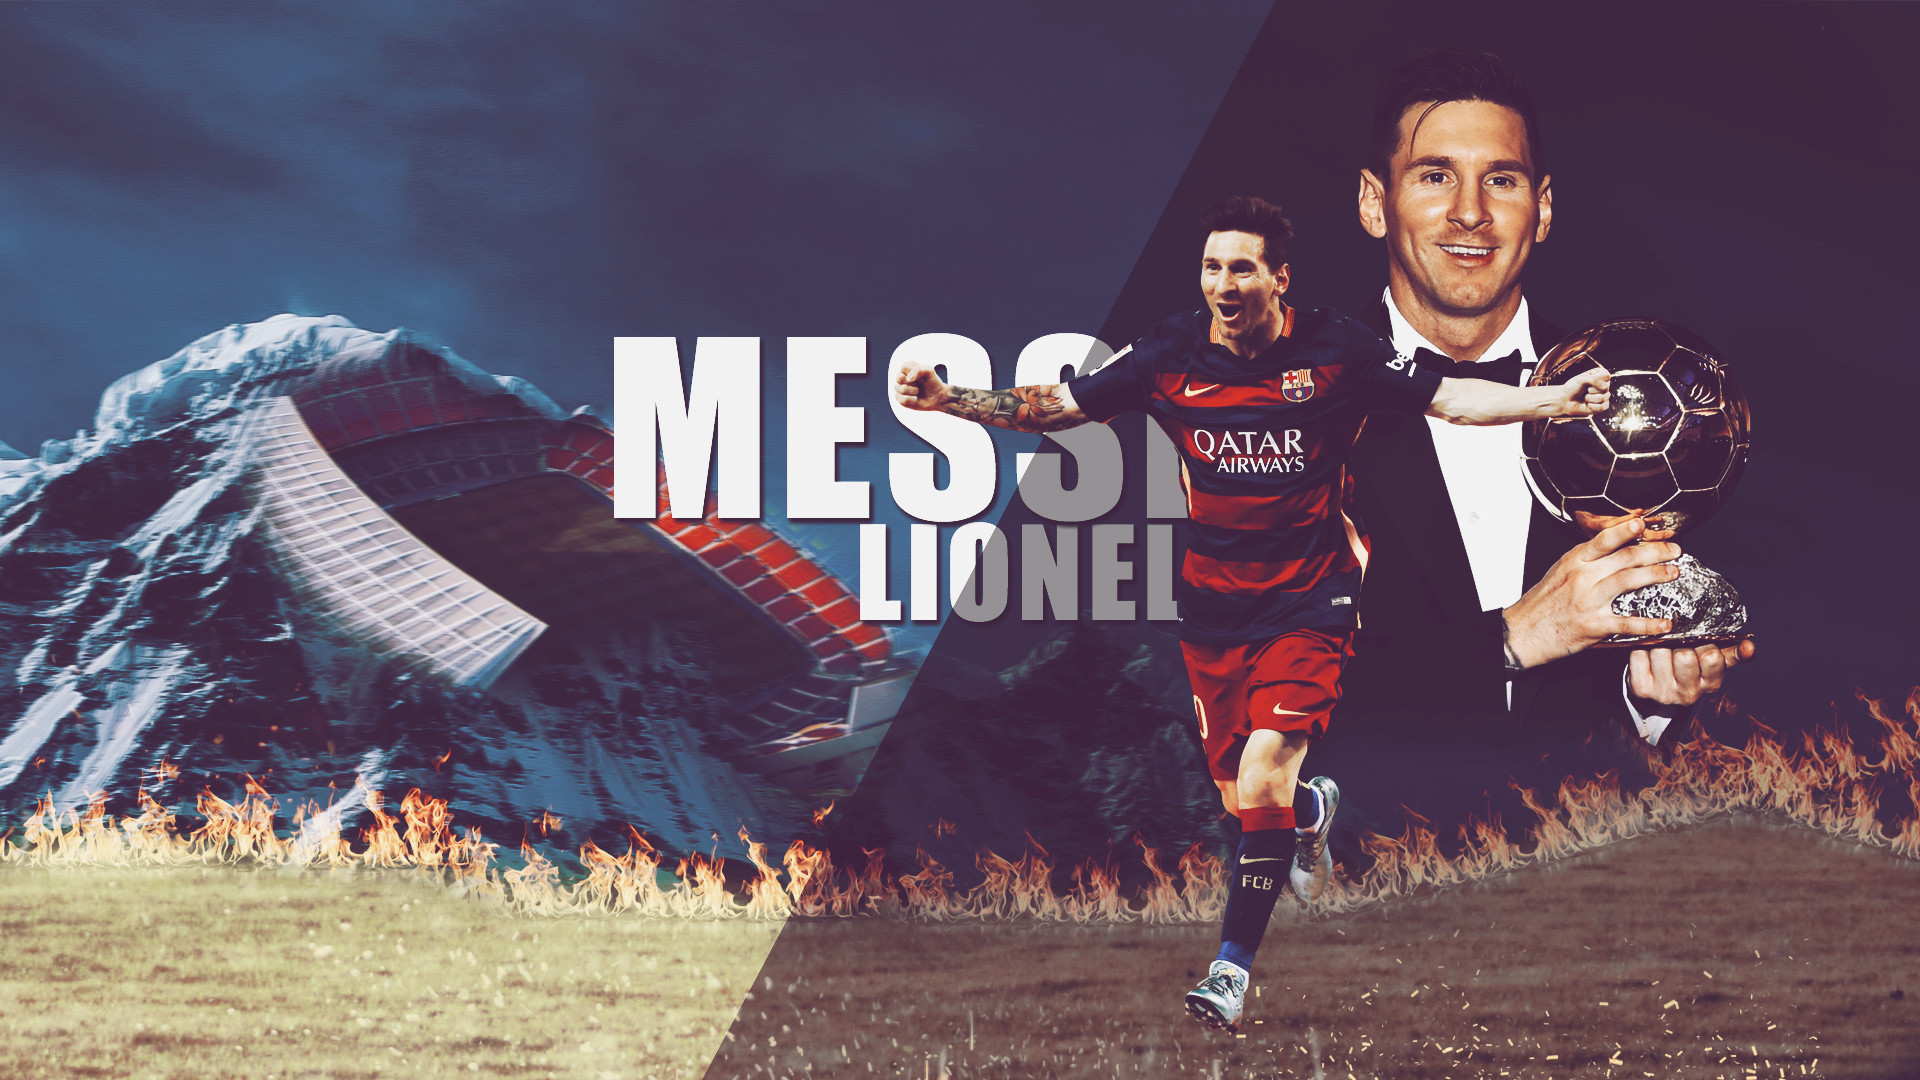 Lionel Messi 2016 Balon D Or Winner Wallpaper - Lionel Messi Messi Wallpaper 2018 For Pc - HD Wallpaper 